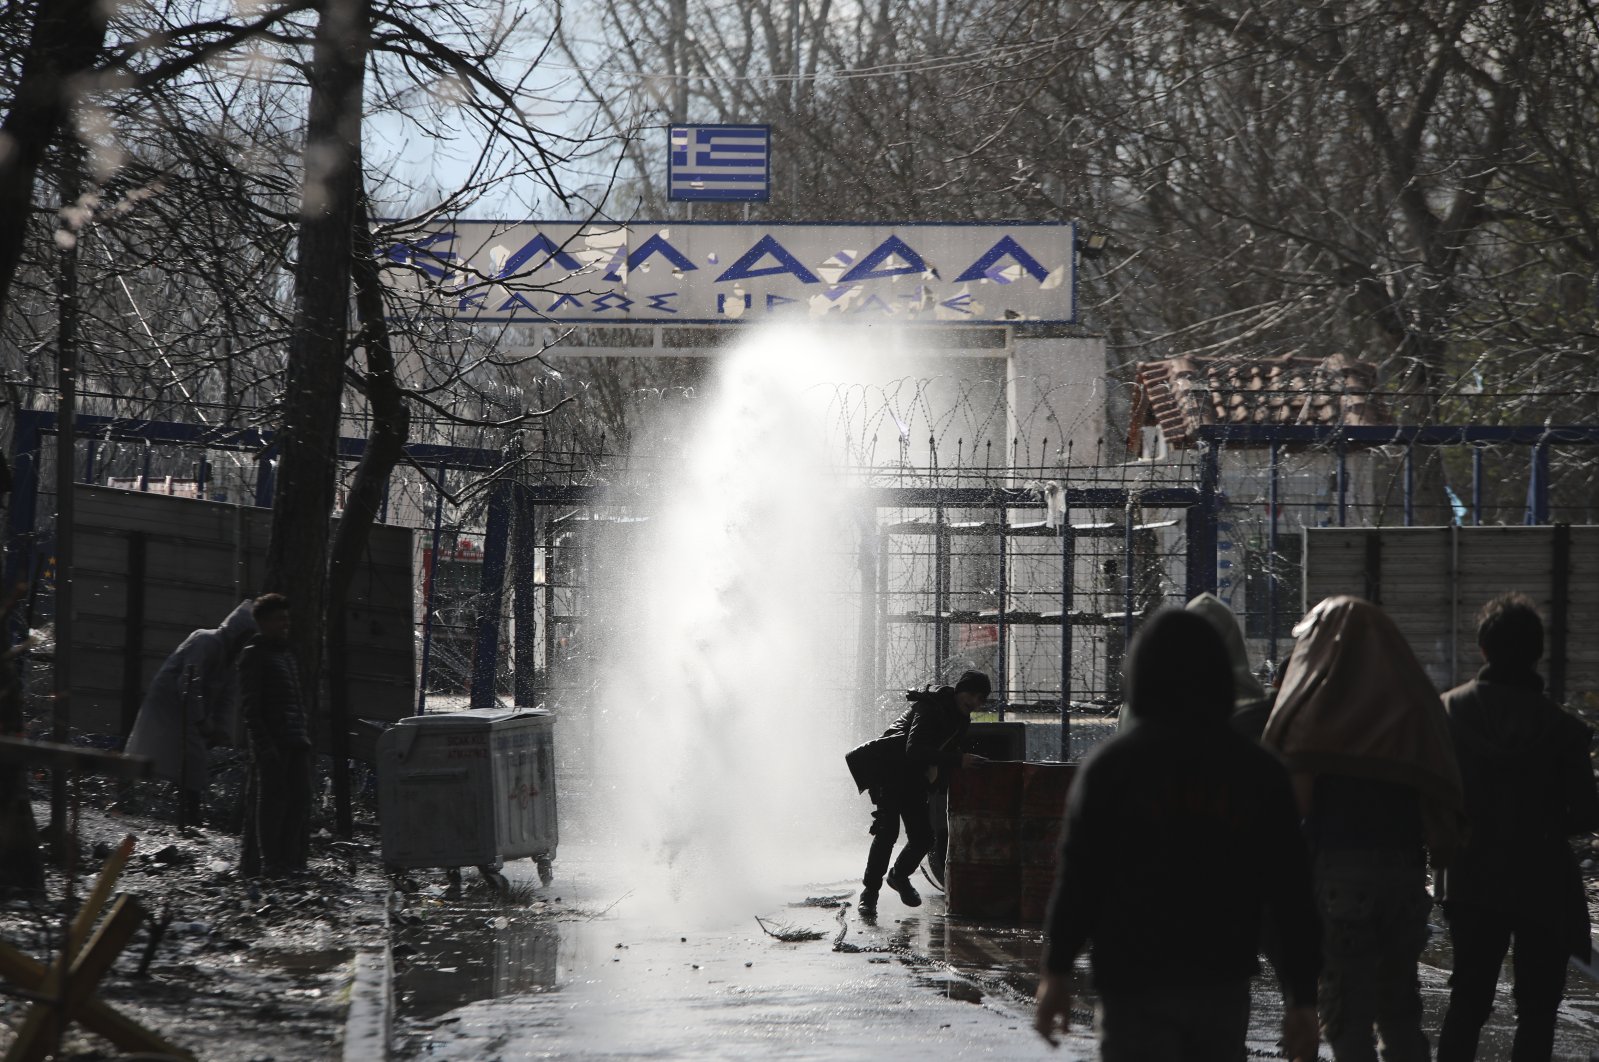 Greek security forces use tear gas against migrants at the Turkish-Greek border in Pazarkule, Edirne region, Turkey, March 11, 2020. (AP Photo)